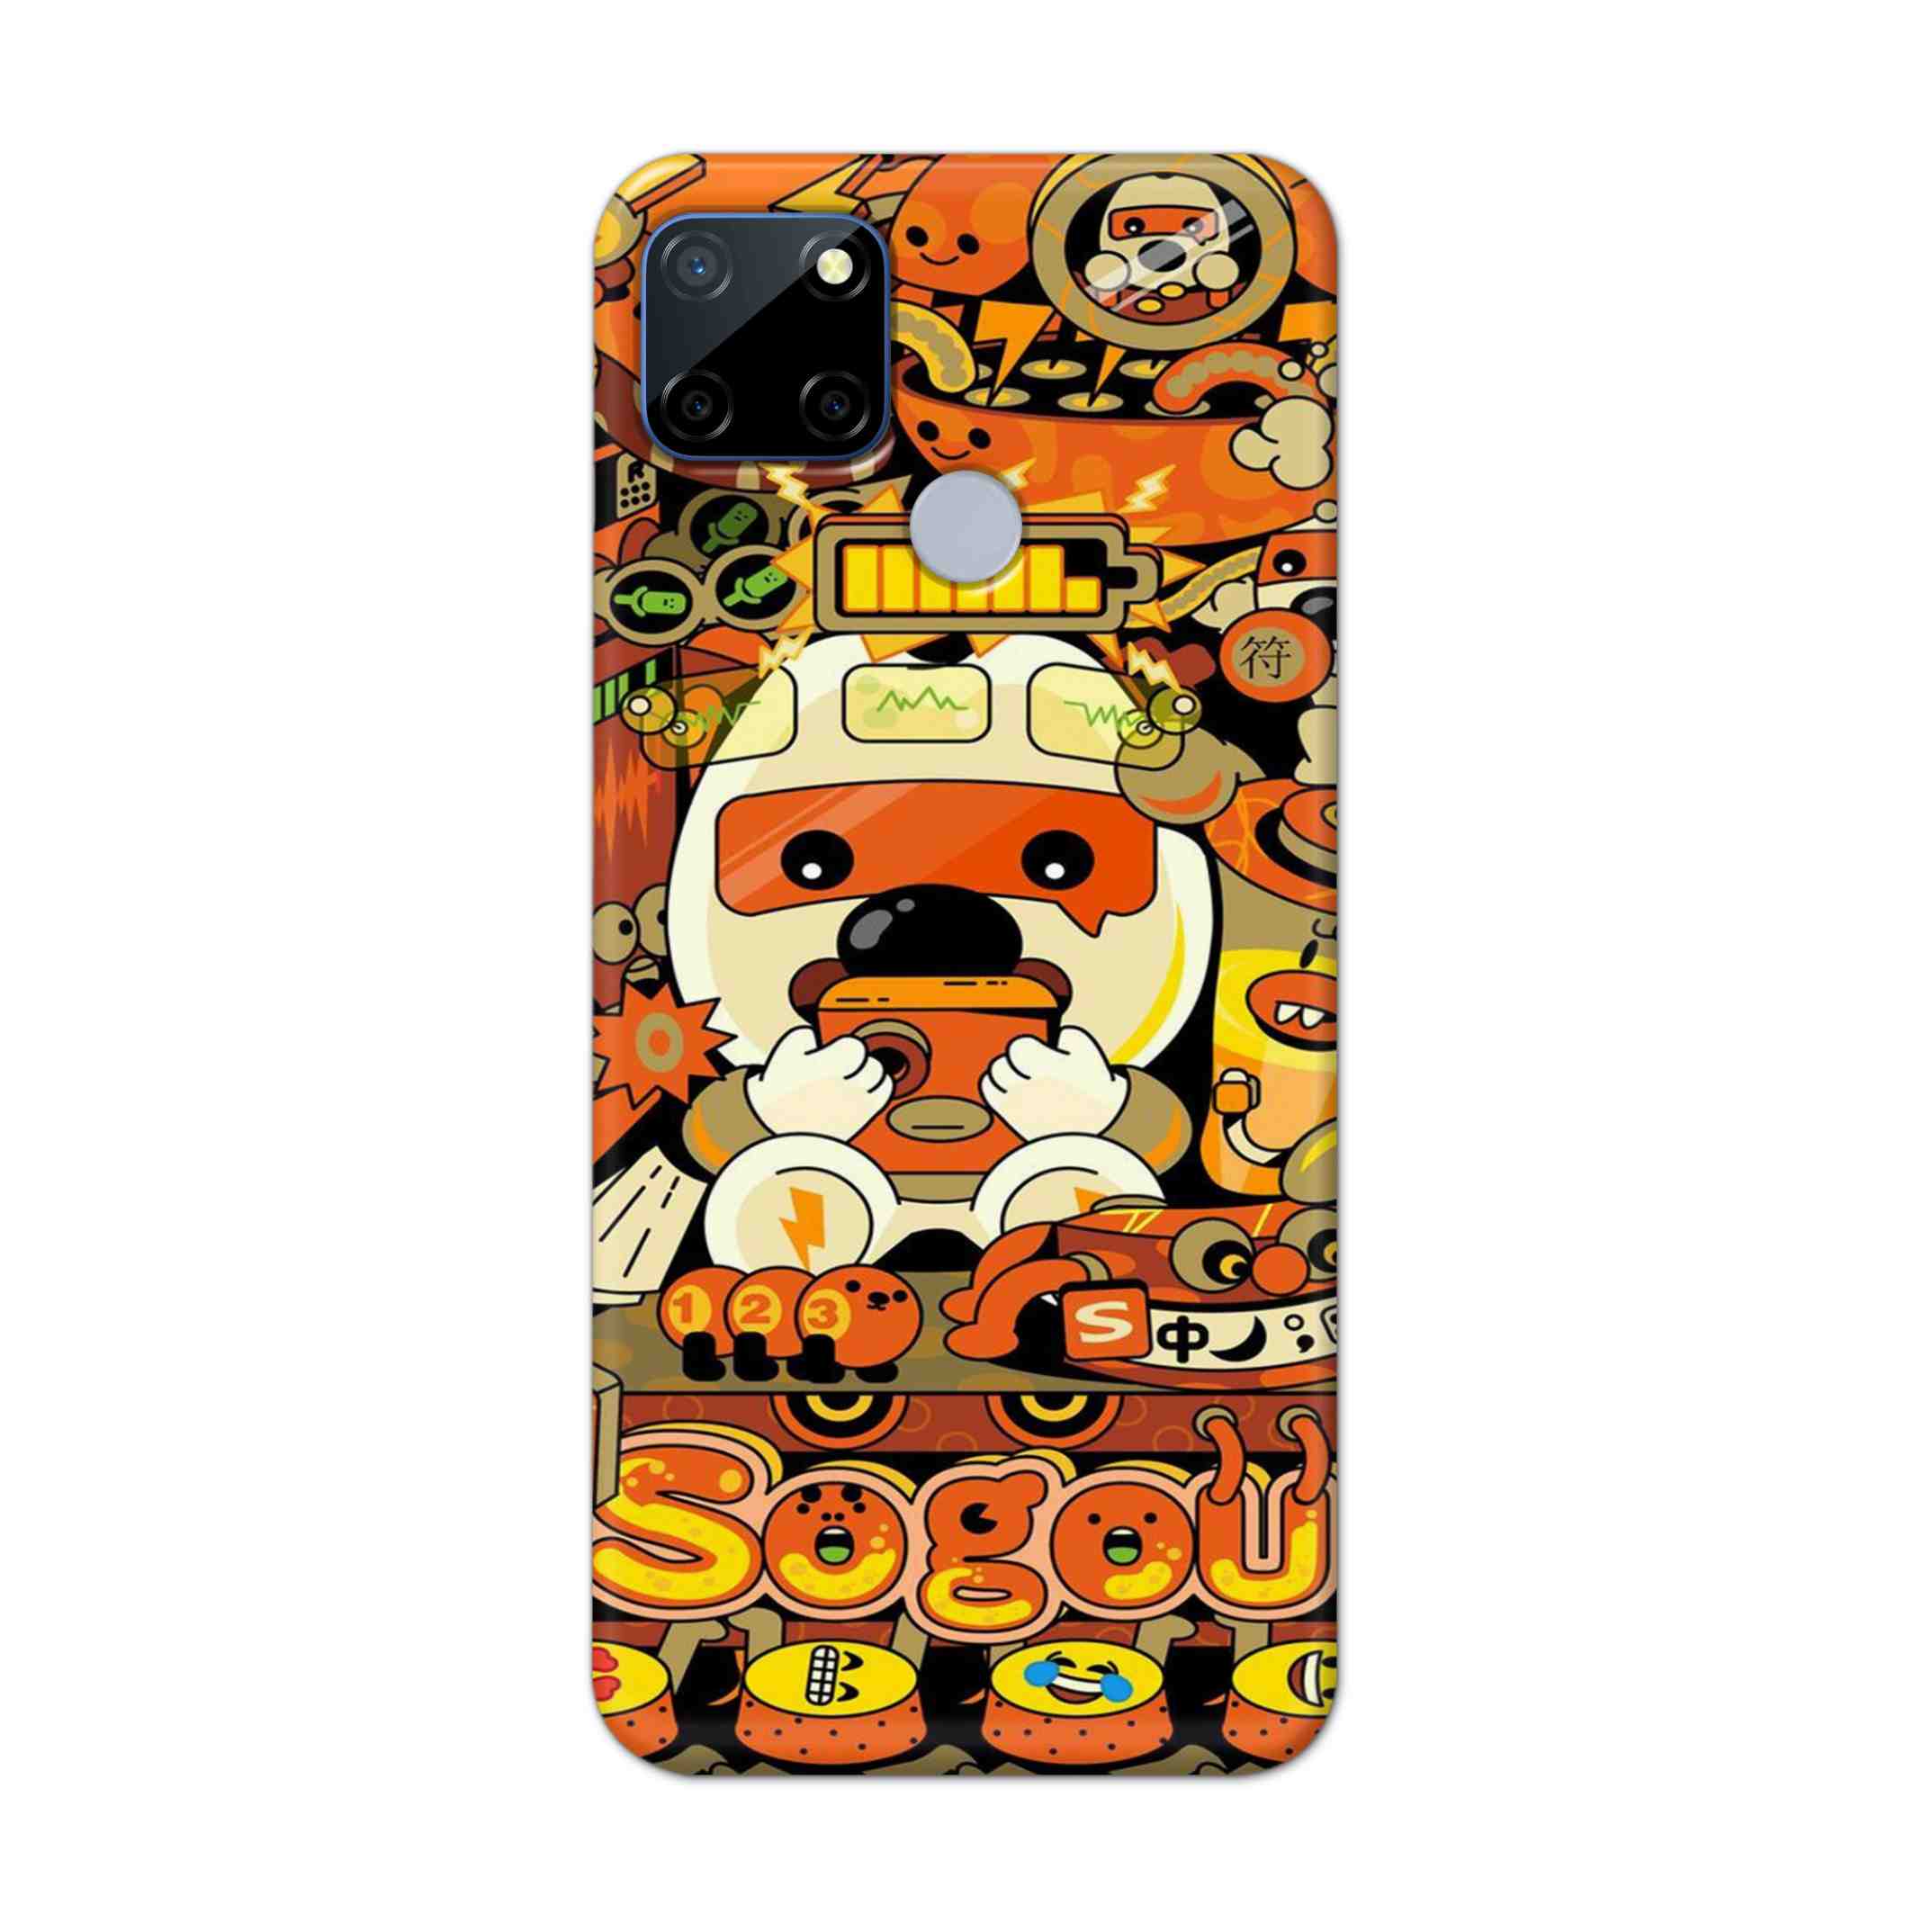 Buy Sogou Hard Back Mobile Phone Case Cover For Realme C12 Online